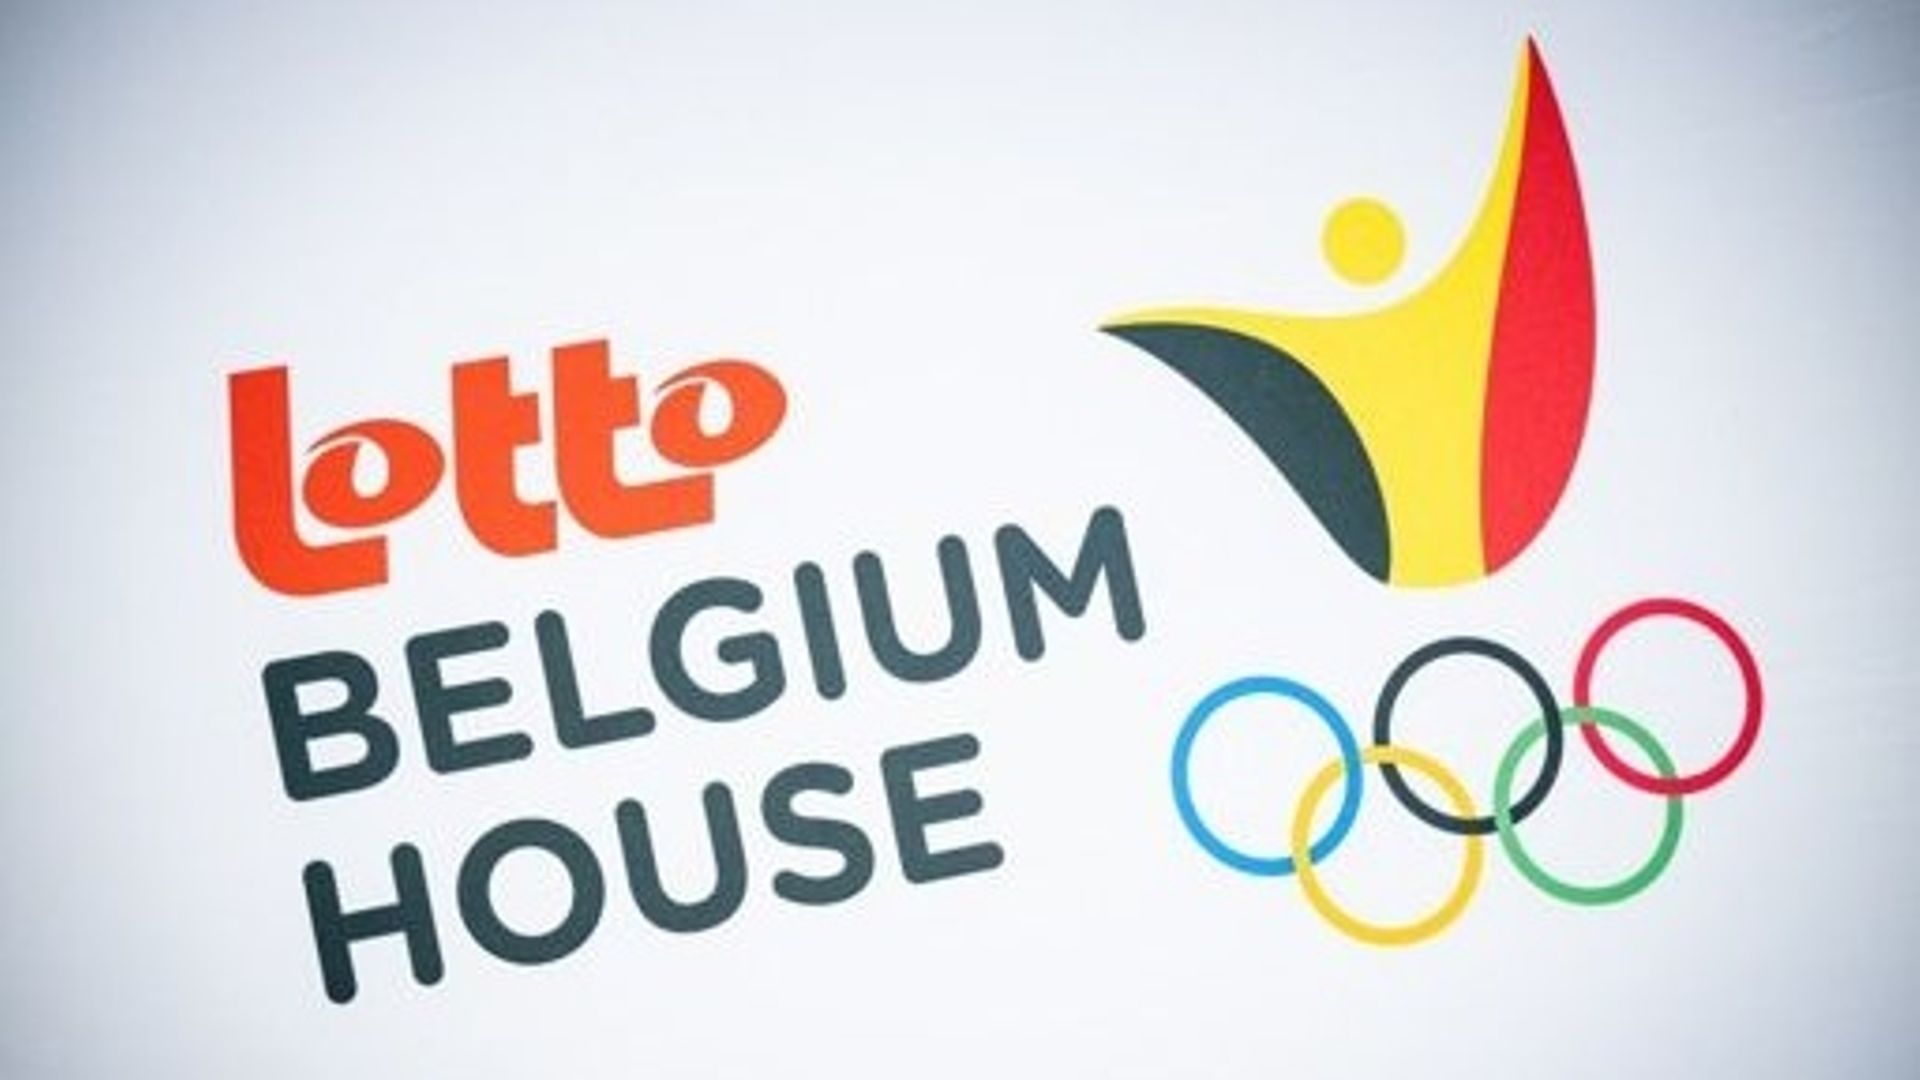 Le logo de la Lotto Belgium House